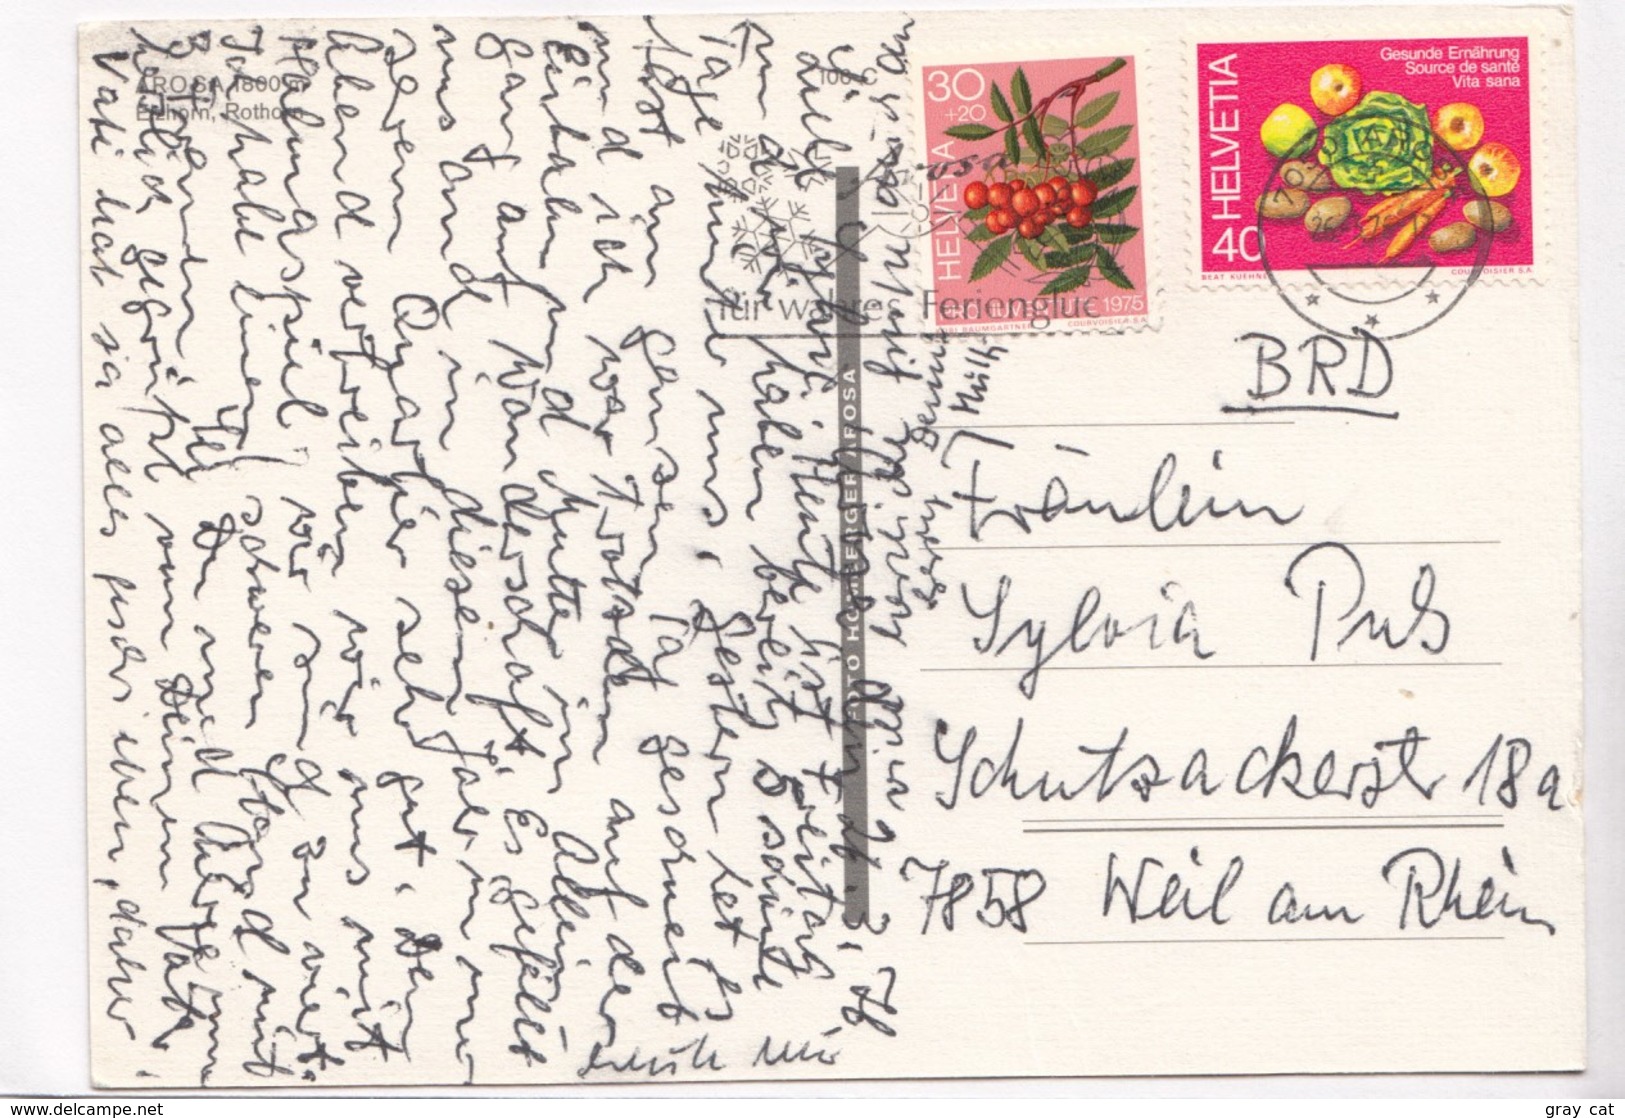 AROSA, 1800 M, Elzhorn, Rothorn, 1976 Used Postcard [22338] - Arosa